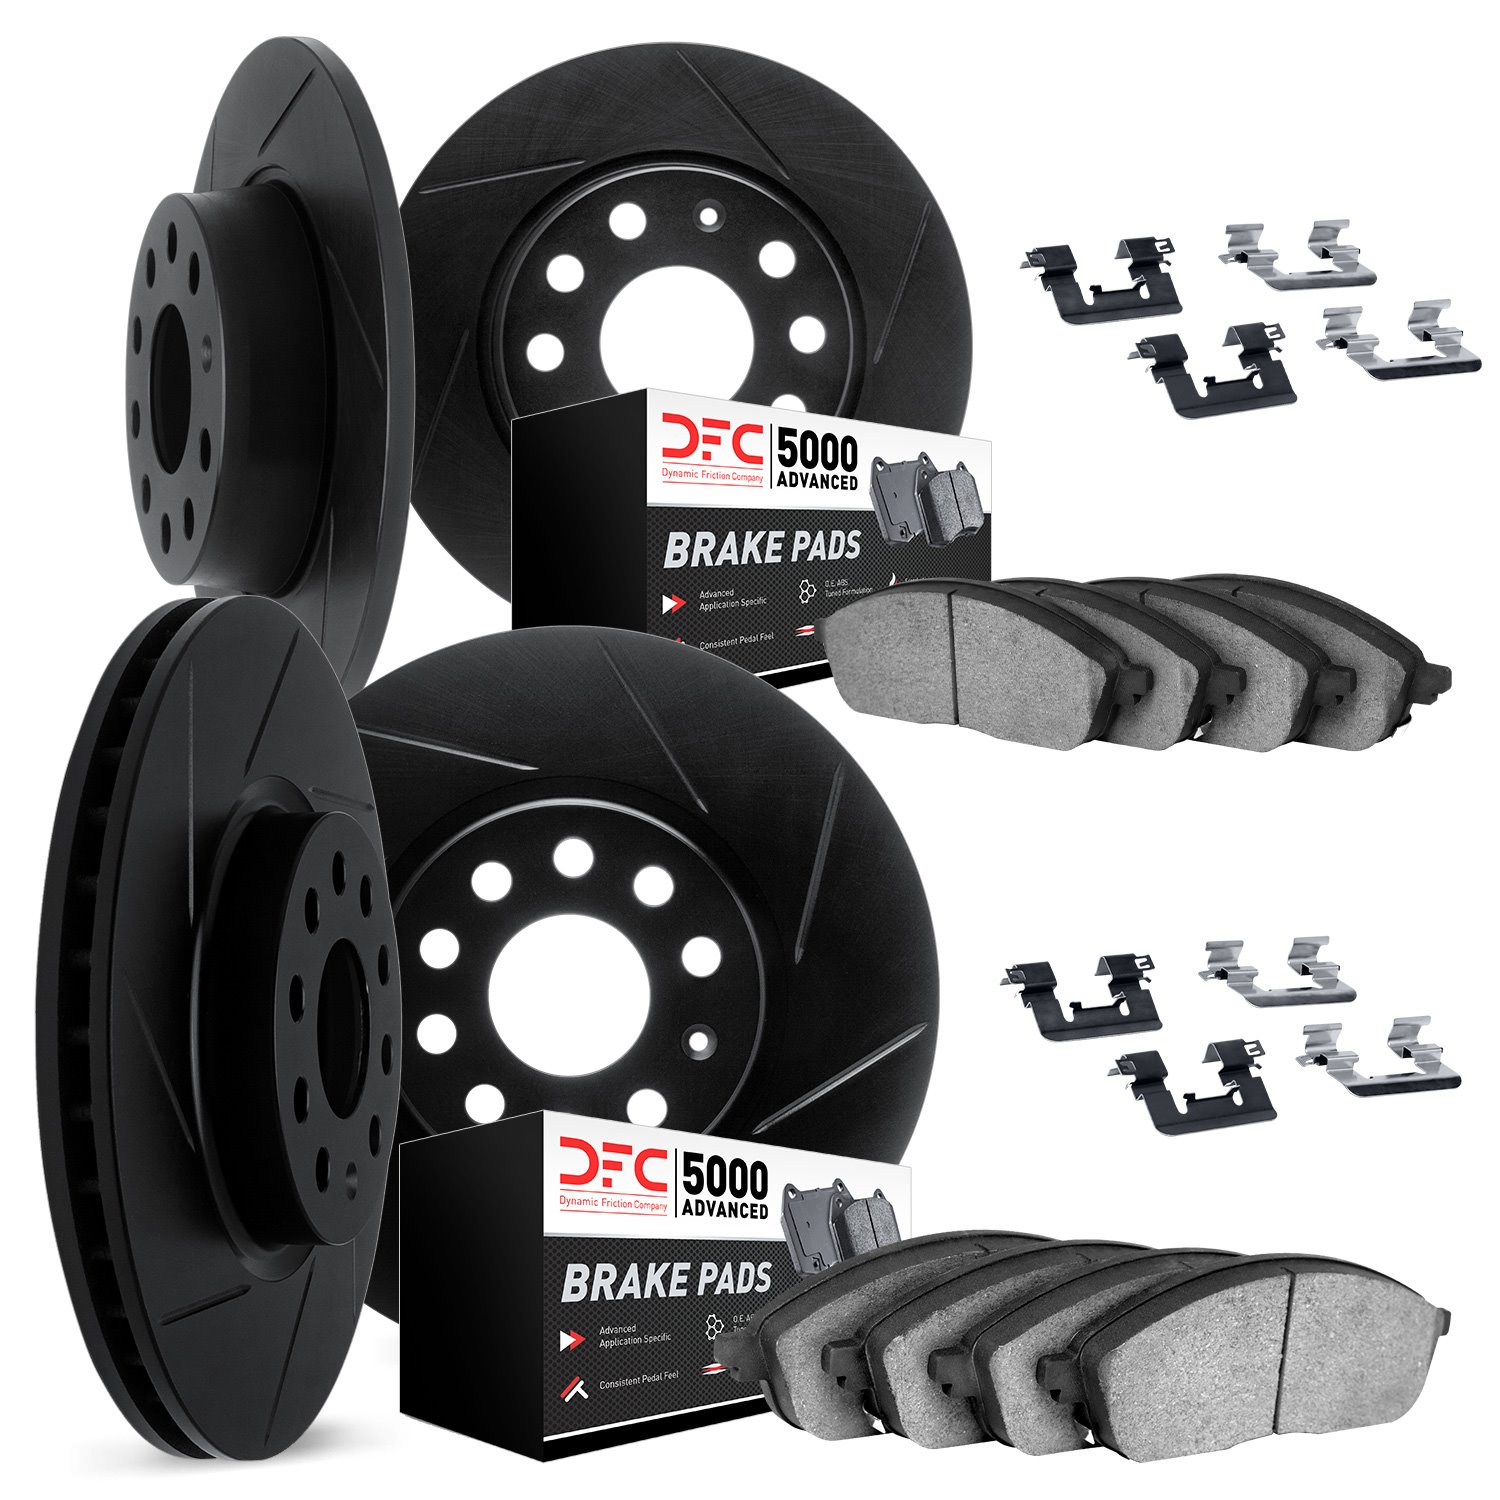 3514-55003 Slotted Brake Rotors w/5000 Advanced Brake Pads Kit & Hardware [Black], 2015-2020 Ford/Lincoln/Mercury/Mazda, Positio